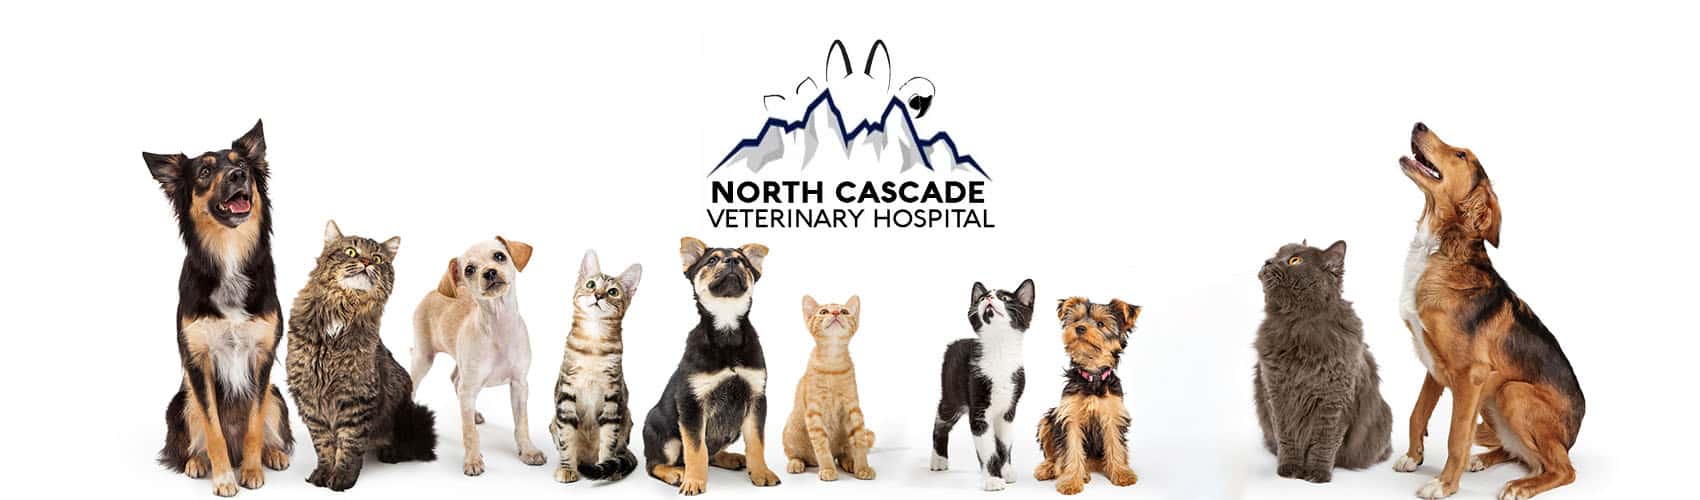 North Cascades Veterinary logo with pets